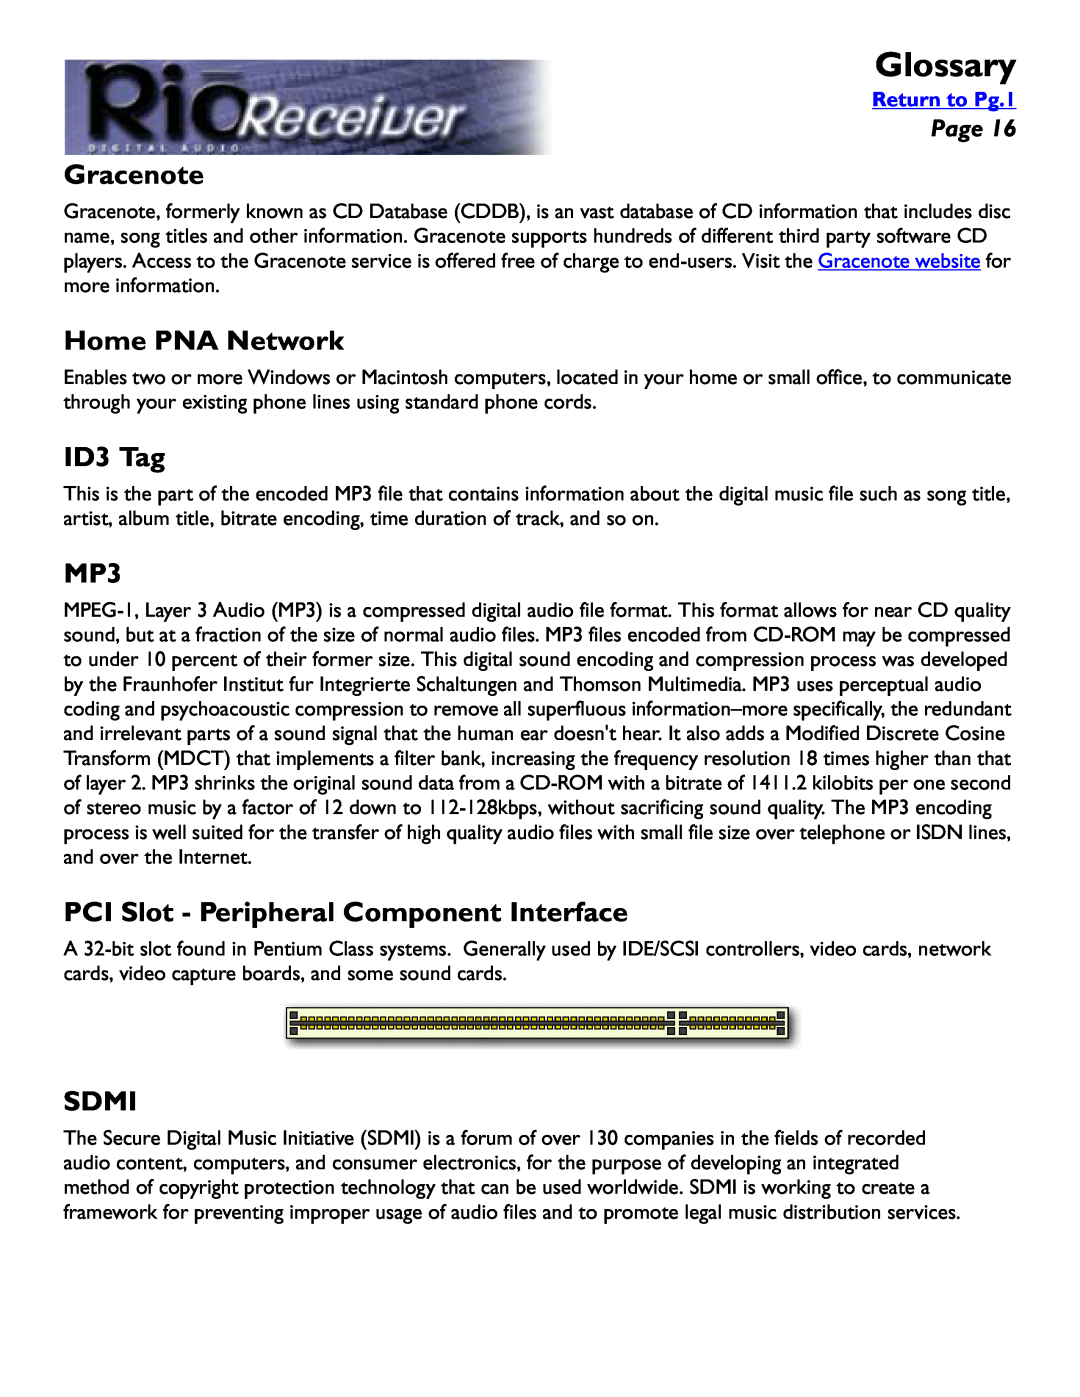 Rio Audio Digital Audio Receiver Glossary, Gracenote, Home PNA Network, ID3 Tag, PCI Slot - Peripheral Component Interface 